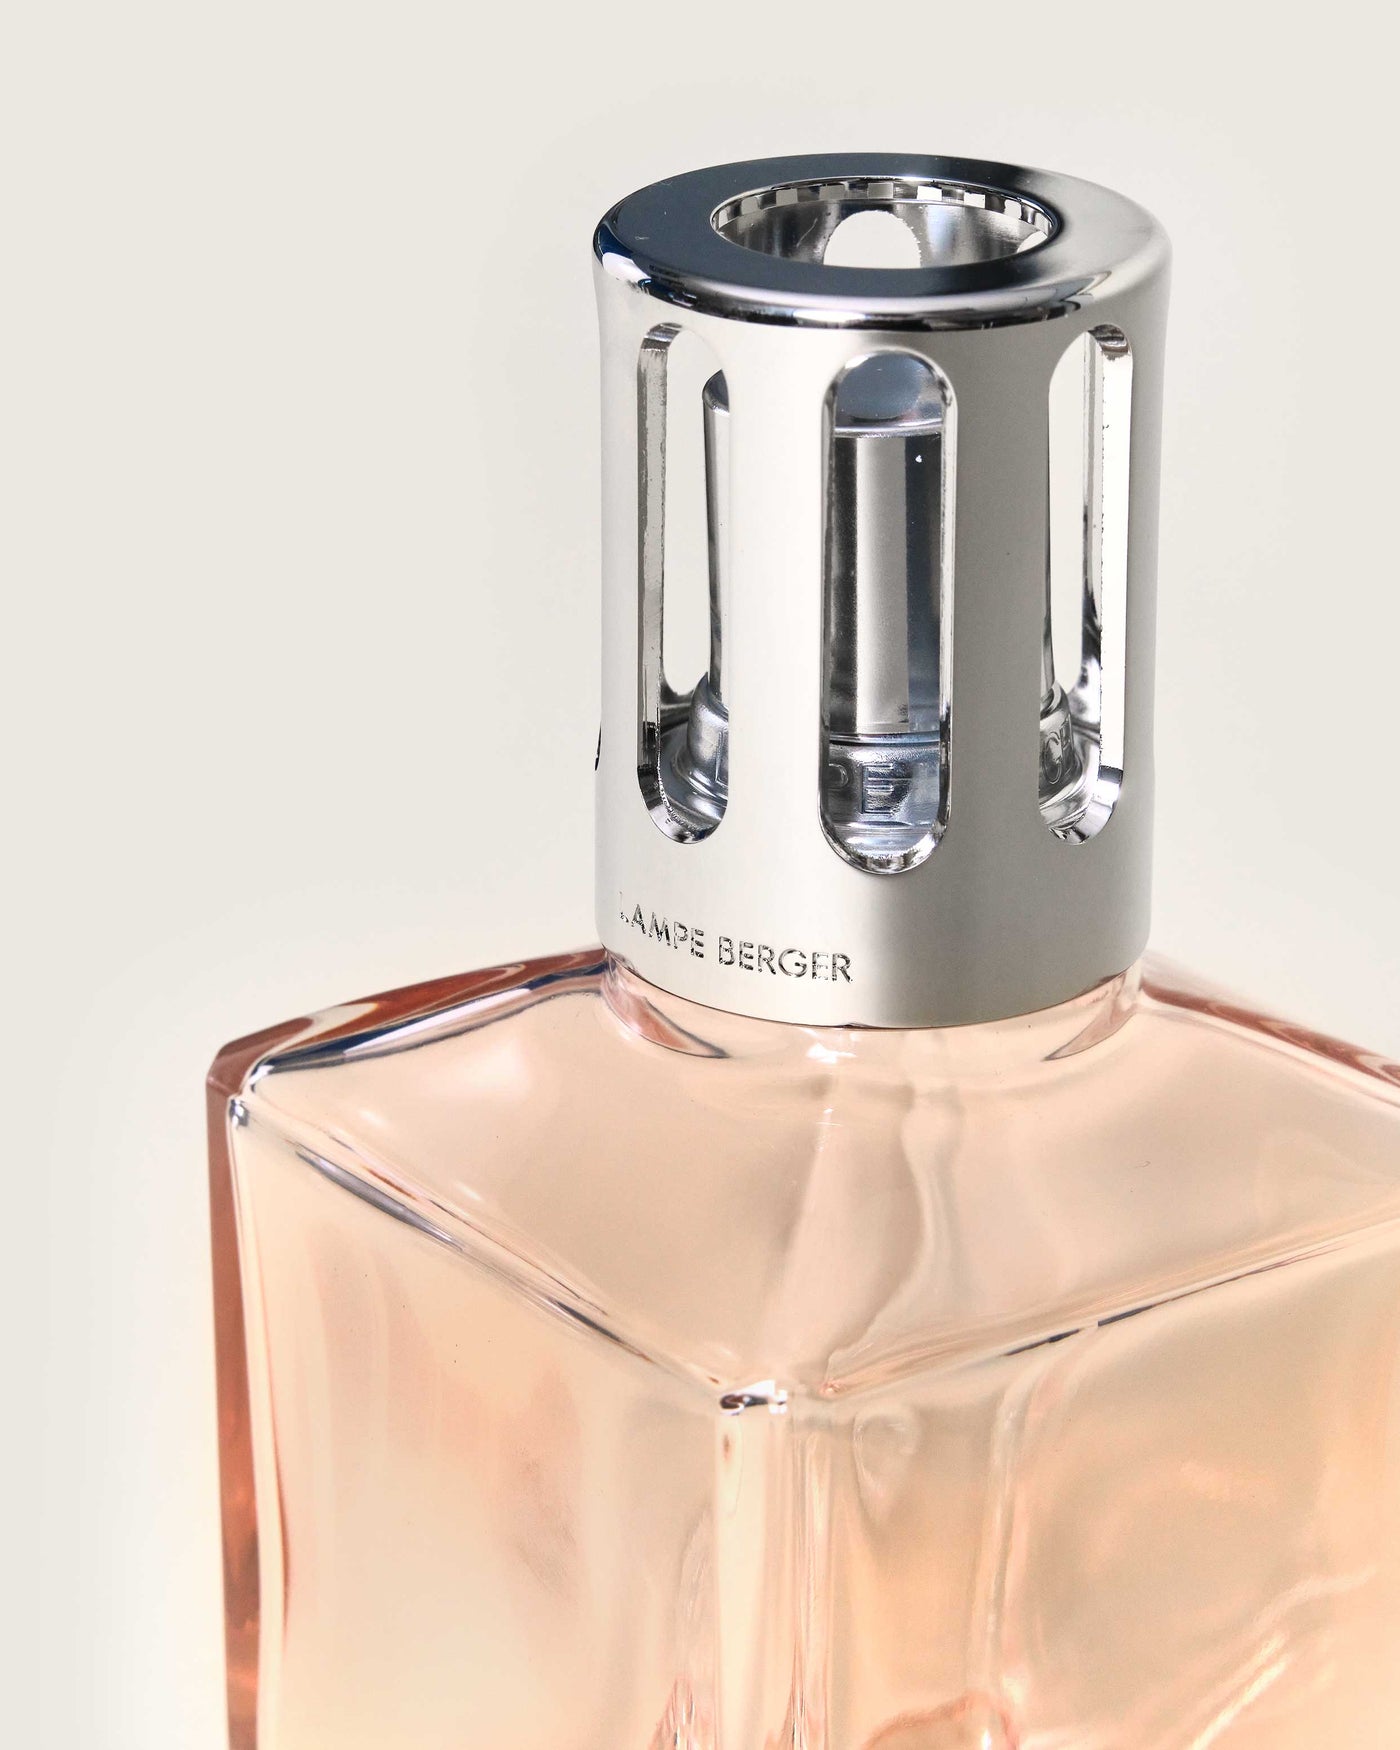 MAISON BERGER - Lampe Berger Modelo Astral - Difusor de lámpara de  fragancia para el hogar - 4.4 x 2.3 x 6.3 pulgadas - Incluye fragancia de  cachemira